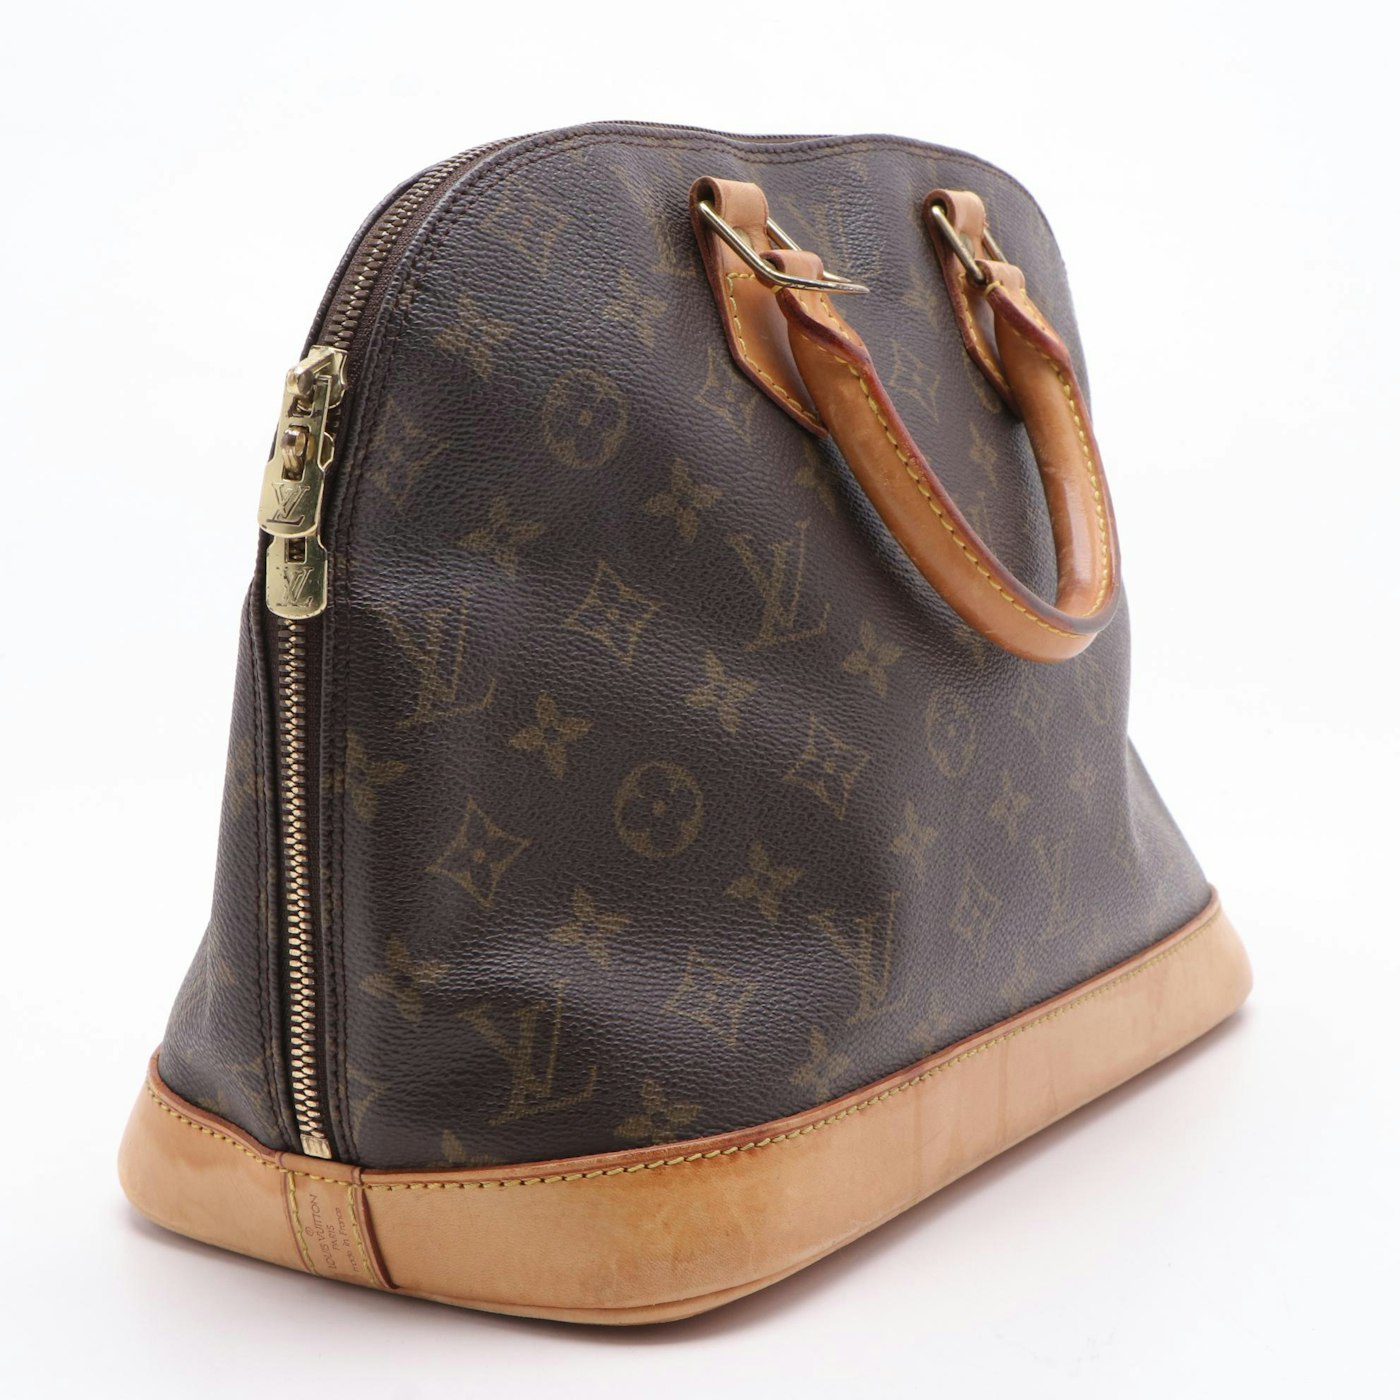 Louis Vuitton Alma PM Bag in Monogram Canvas and Vachetta Leather | EBTH